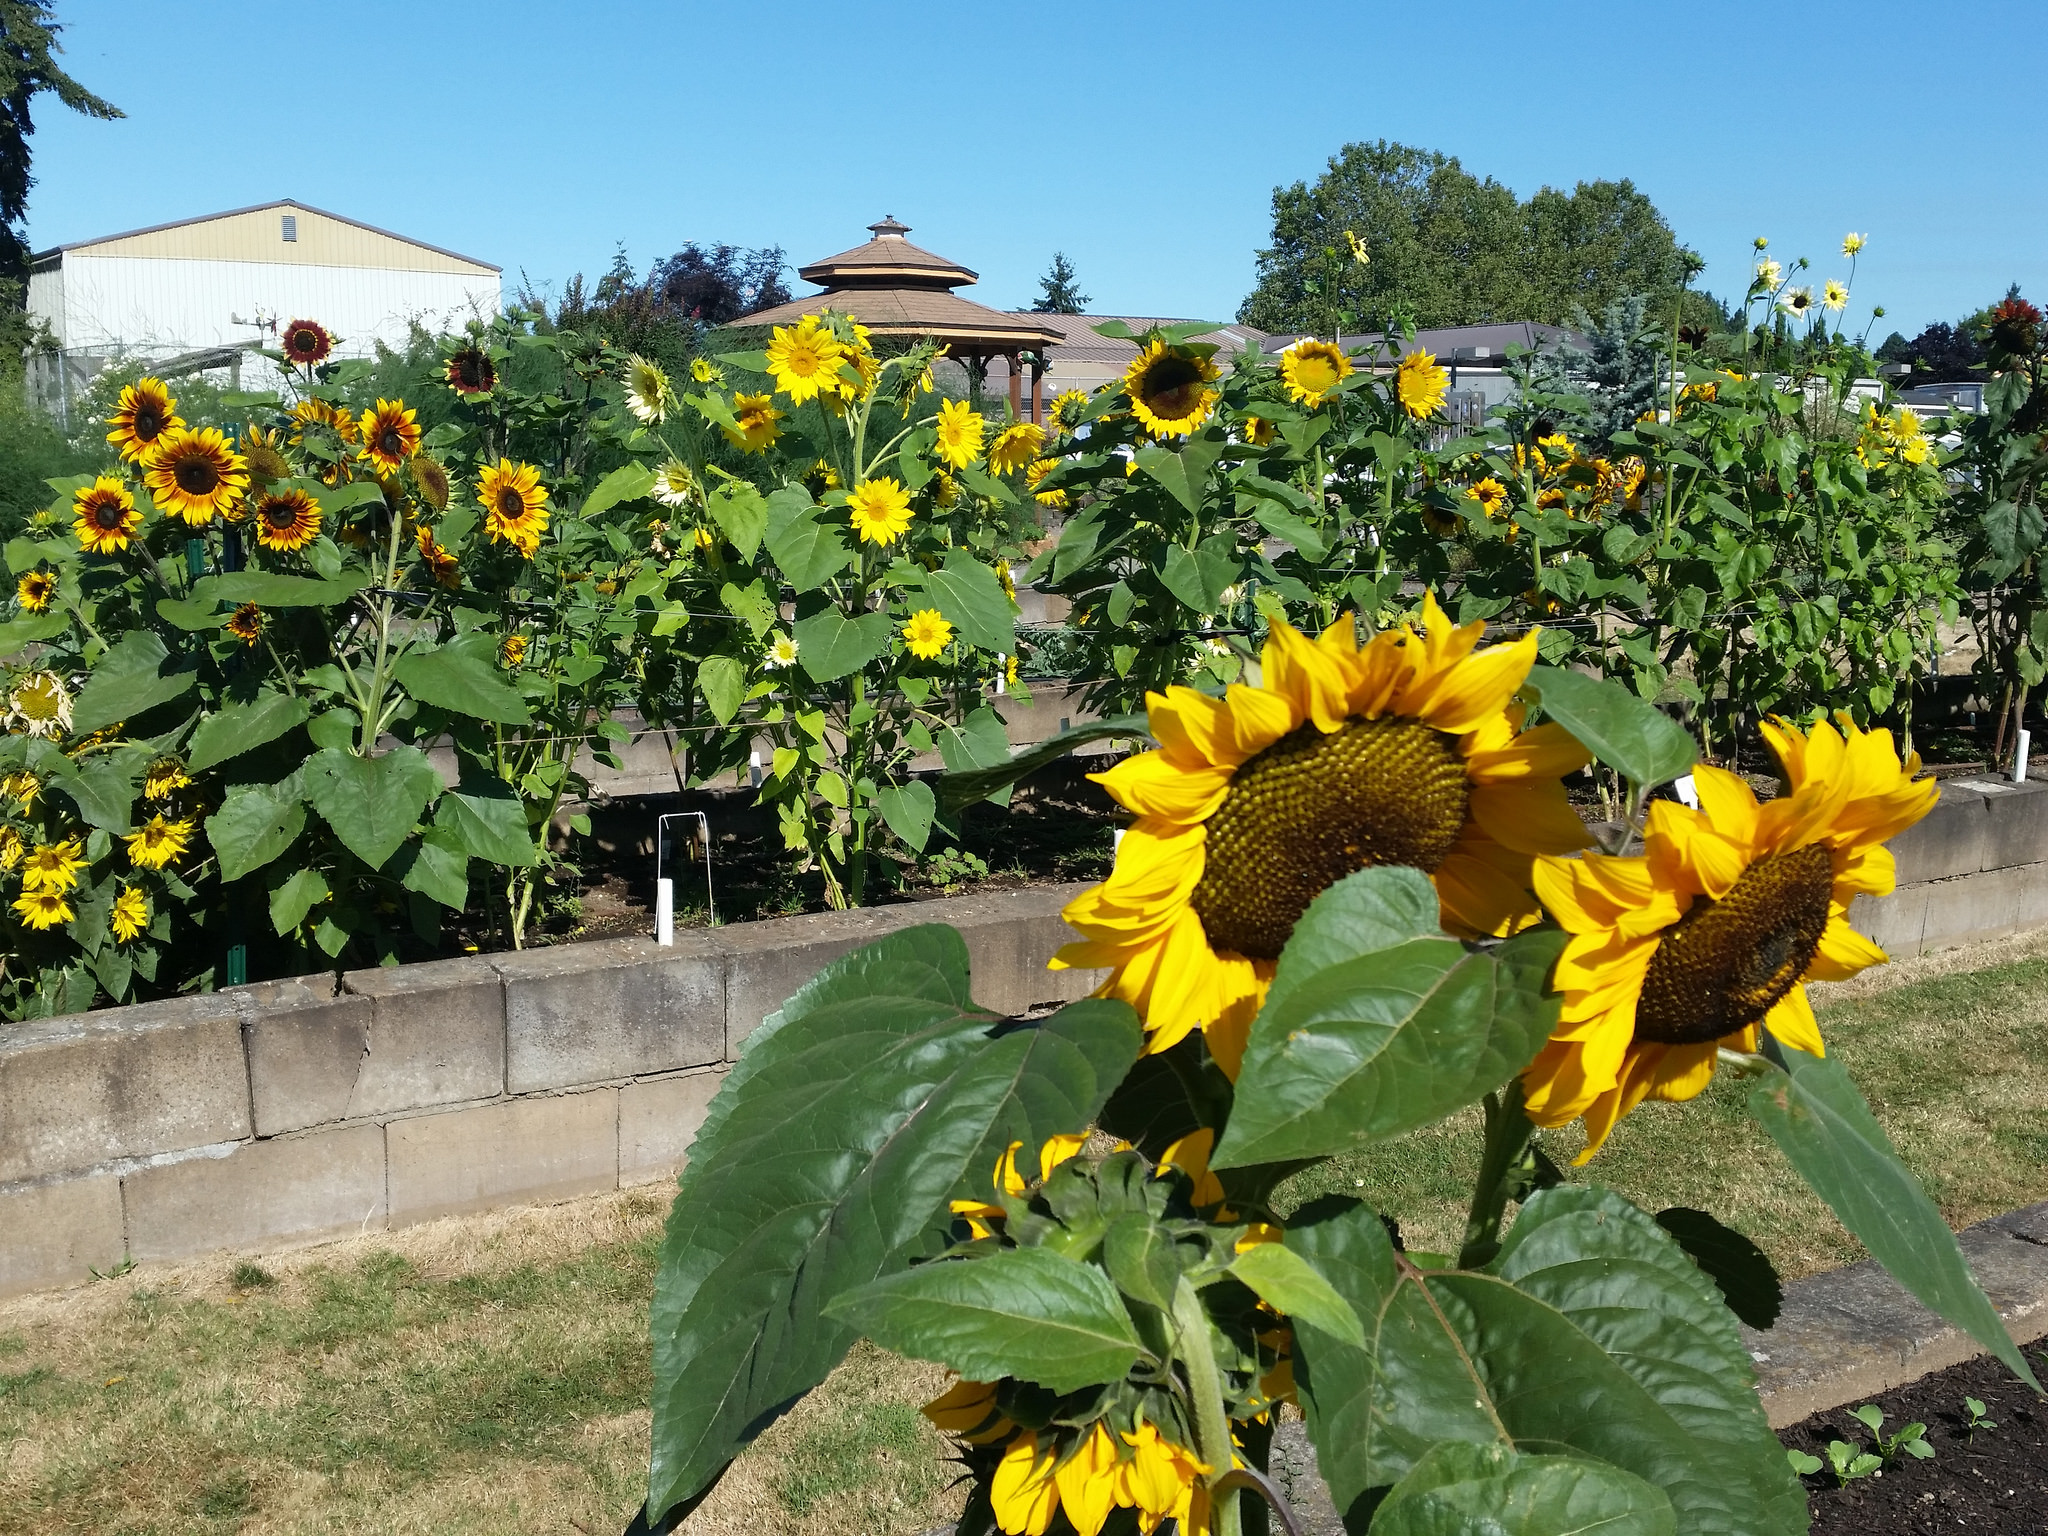 Sunflowers burst onto scene with new personalities